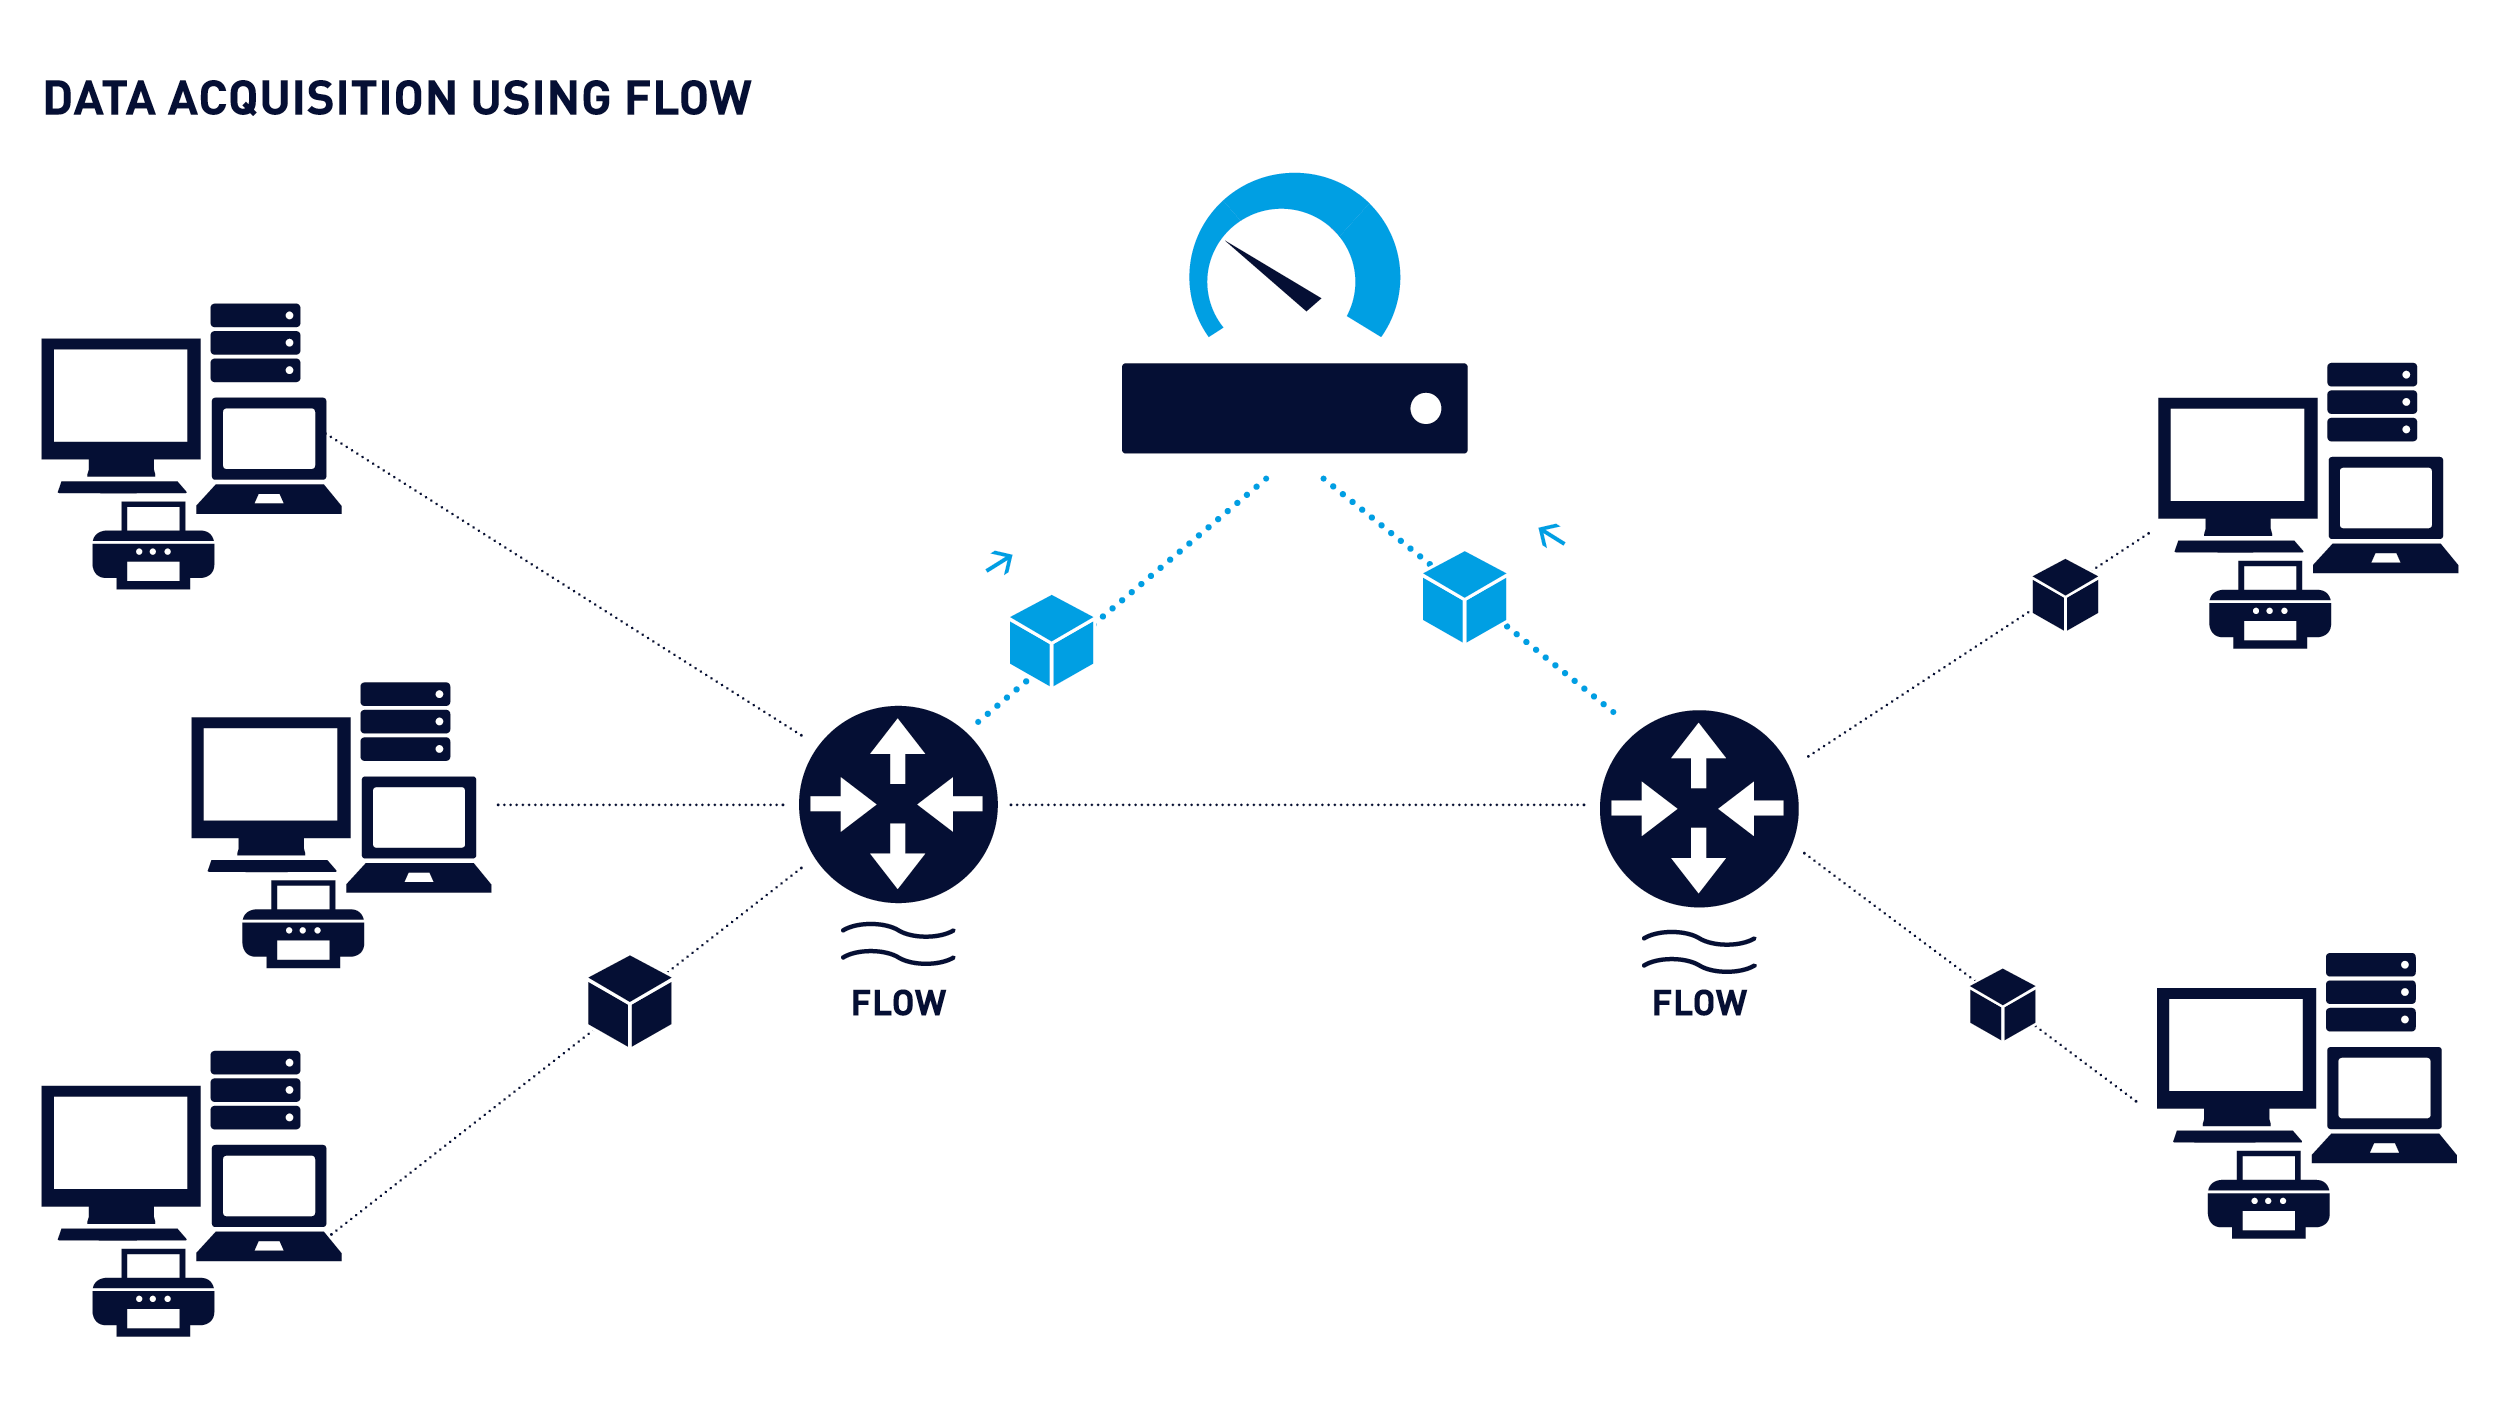 Data acquisition using flow